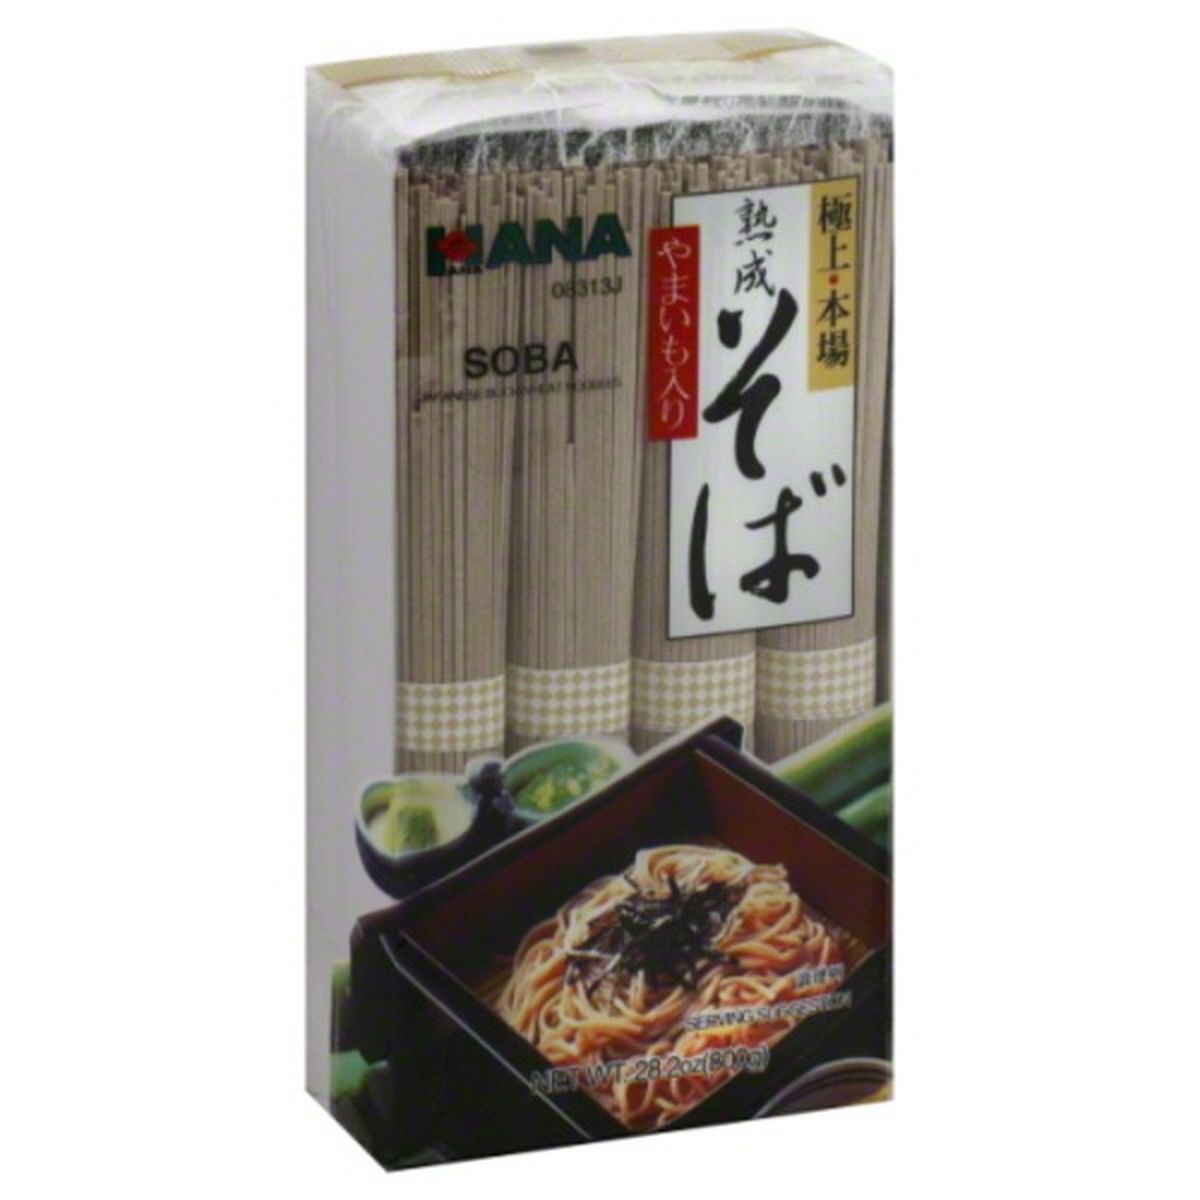 Calories in Hana Noodles, Japanese Buckwheat